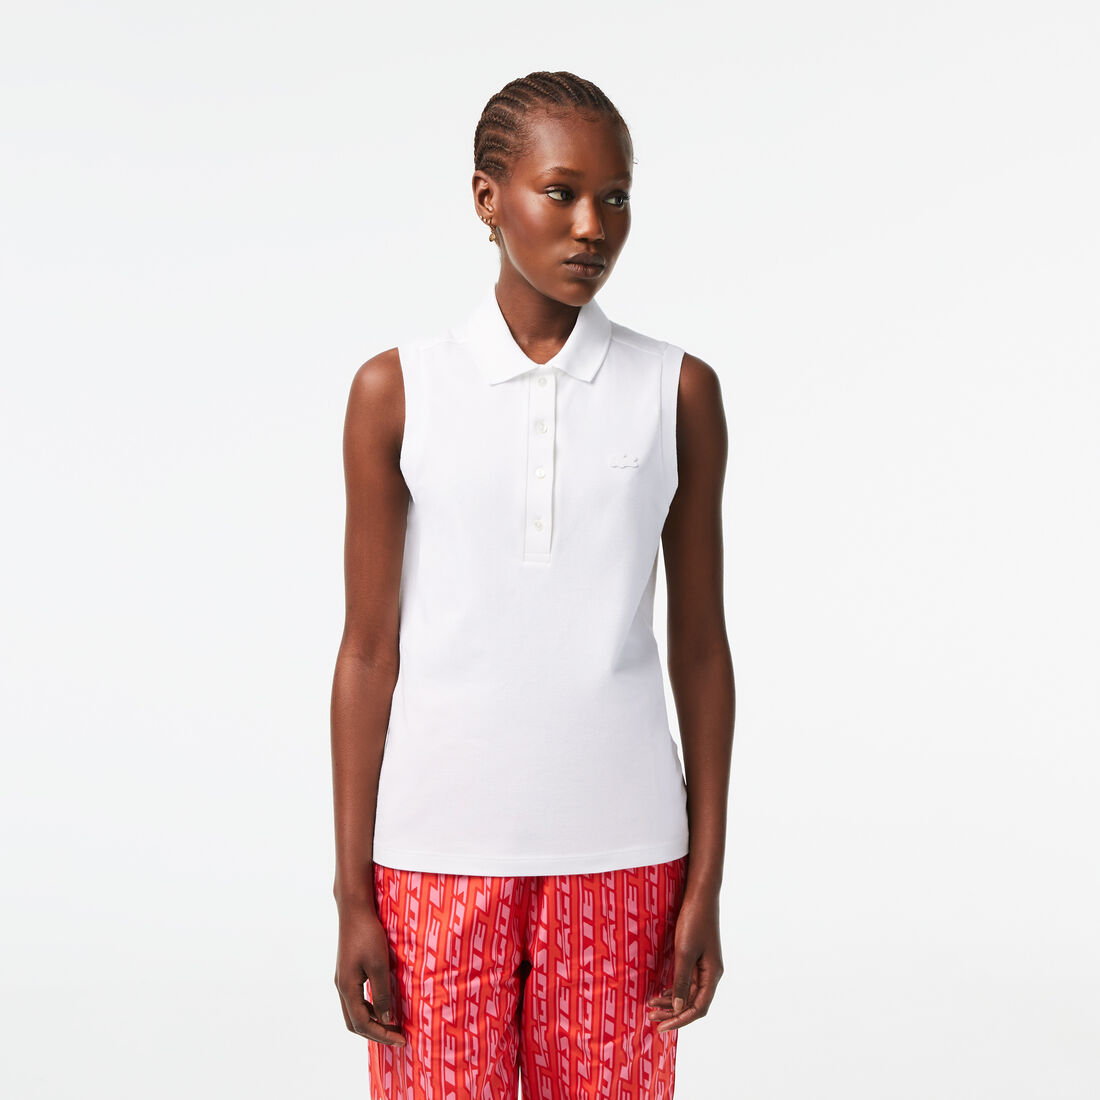 Lacoste Slim Fit Ärmellose Baumwoll Piqué Polo Shirts Damen Weiß | CLKU-94687